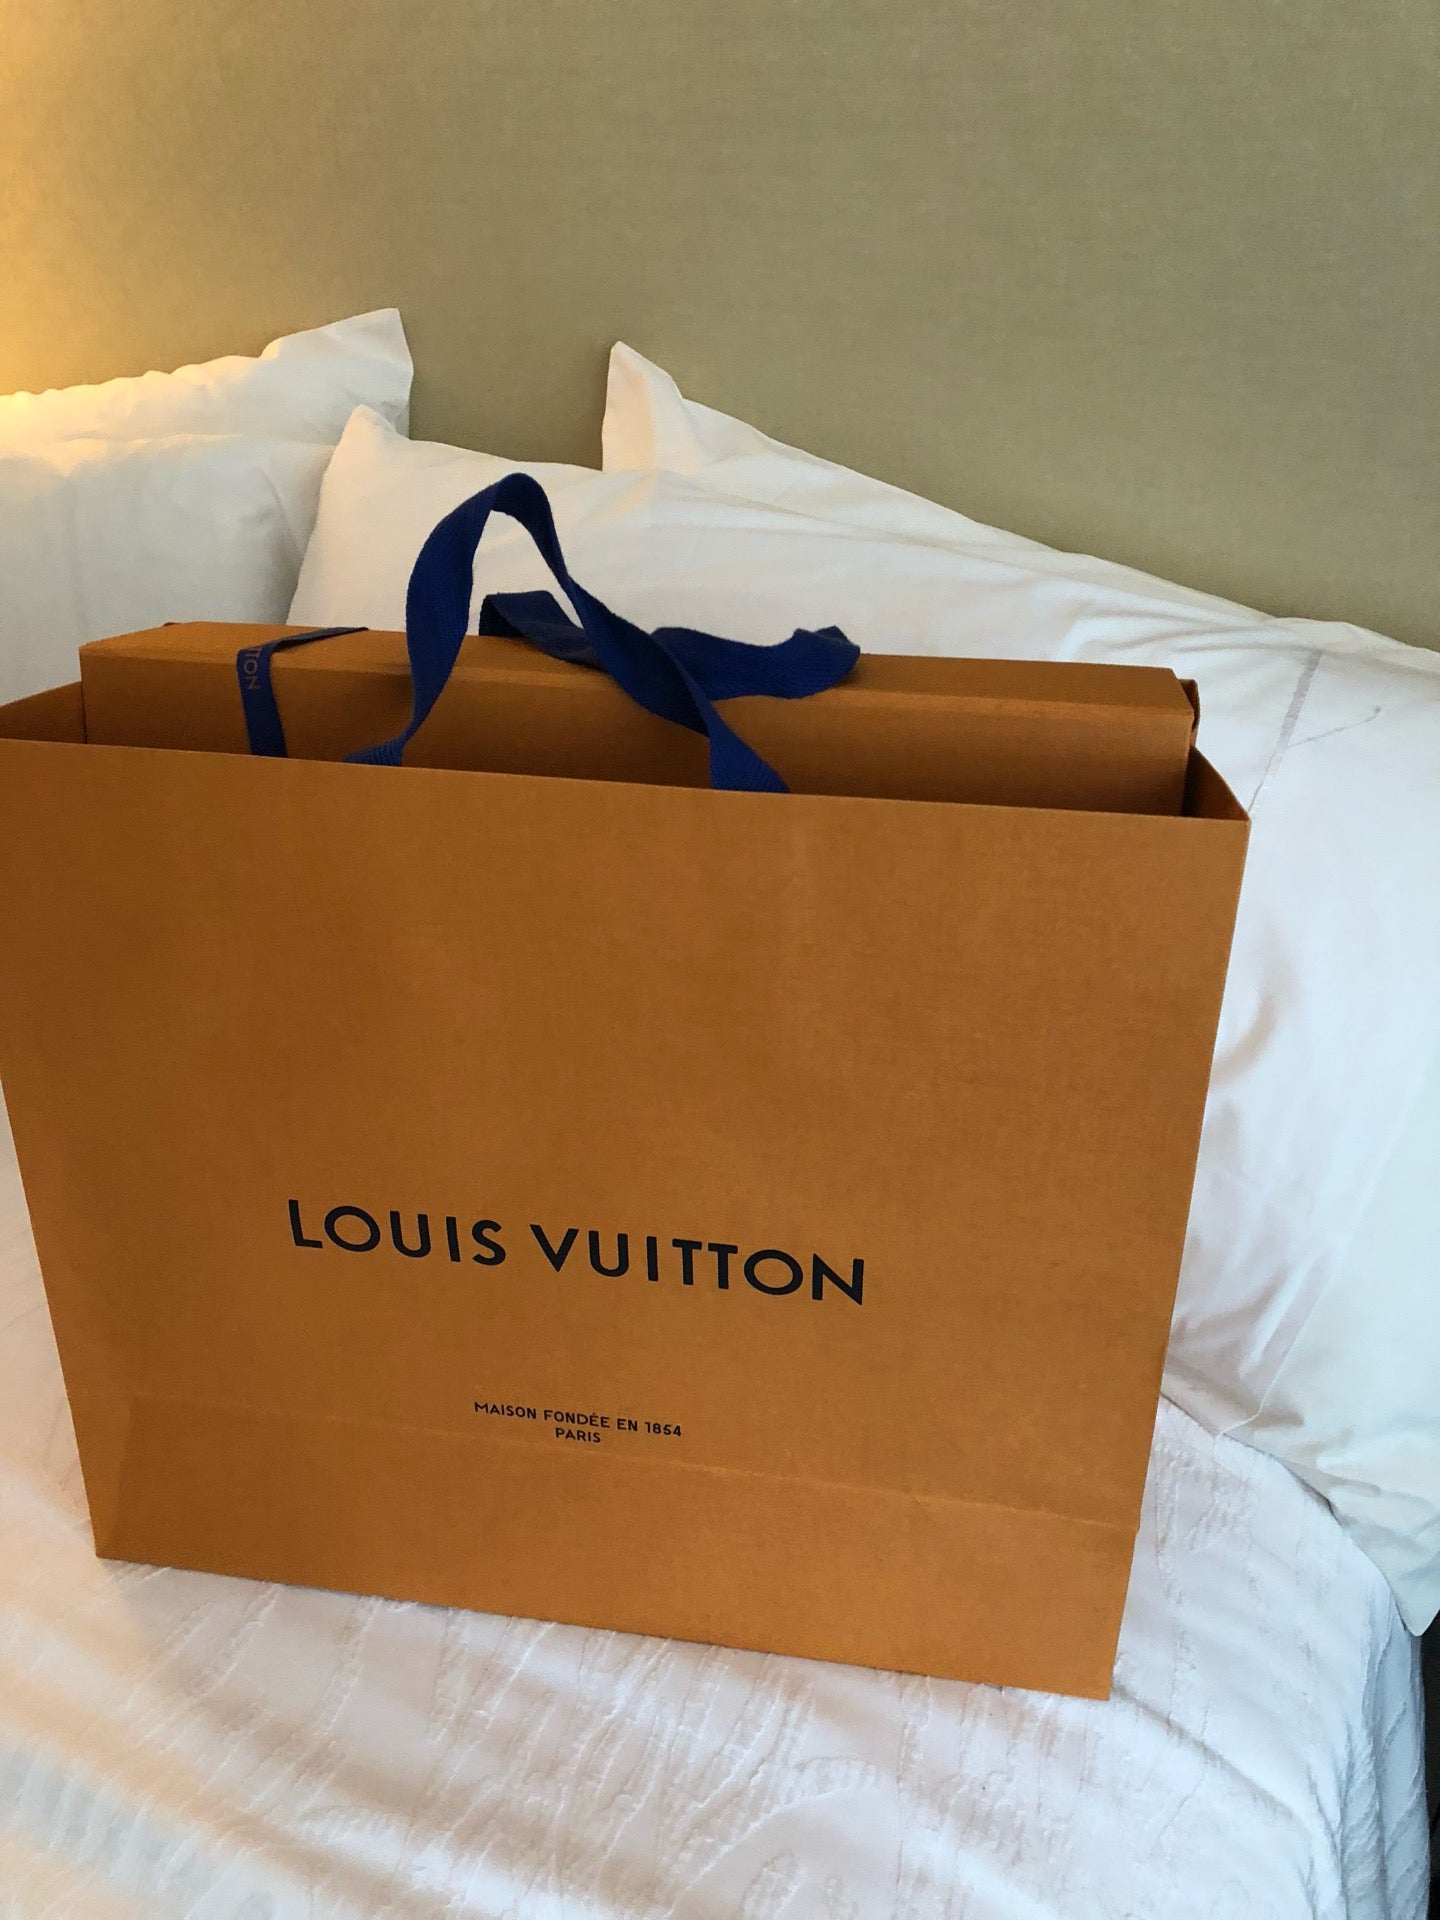 Louis Vuitton - New York, NY 10001